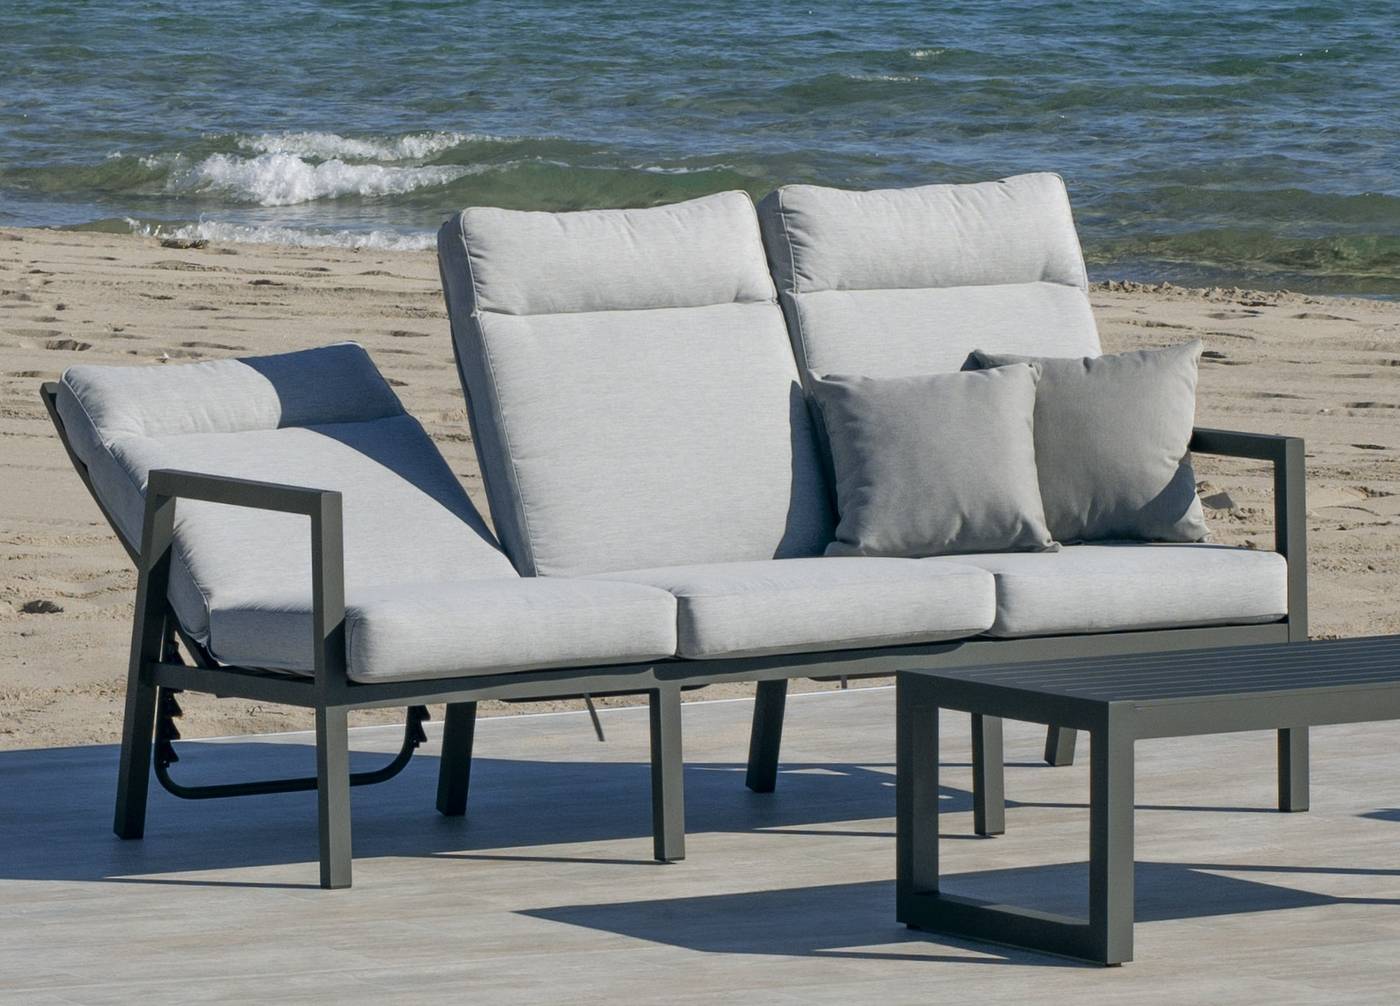 Set Aluminio Voriam-11 - Conjunto aluminio: sofá 3 plazas + 2 sillones + mesa de centro alta + 2 taburetes. Respaldos reclinables. Colores: blanco, antracita, champagne, plata o marrón.